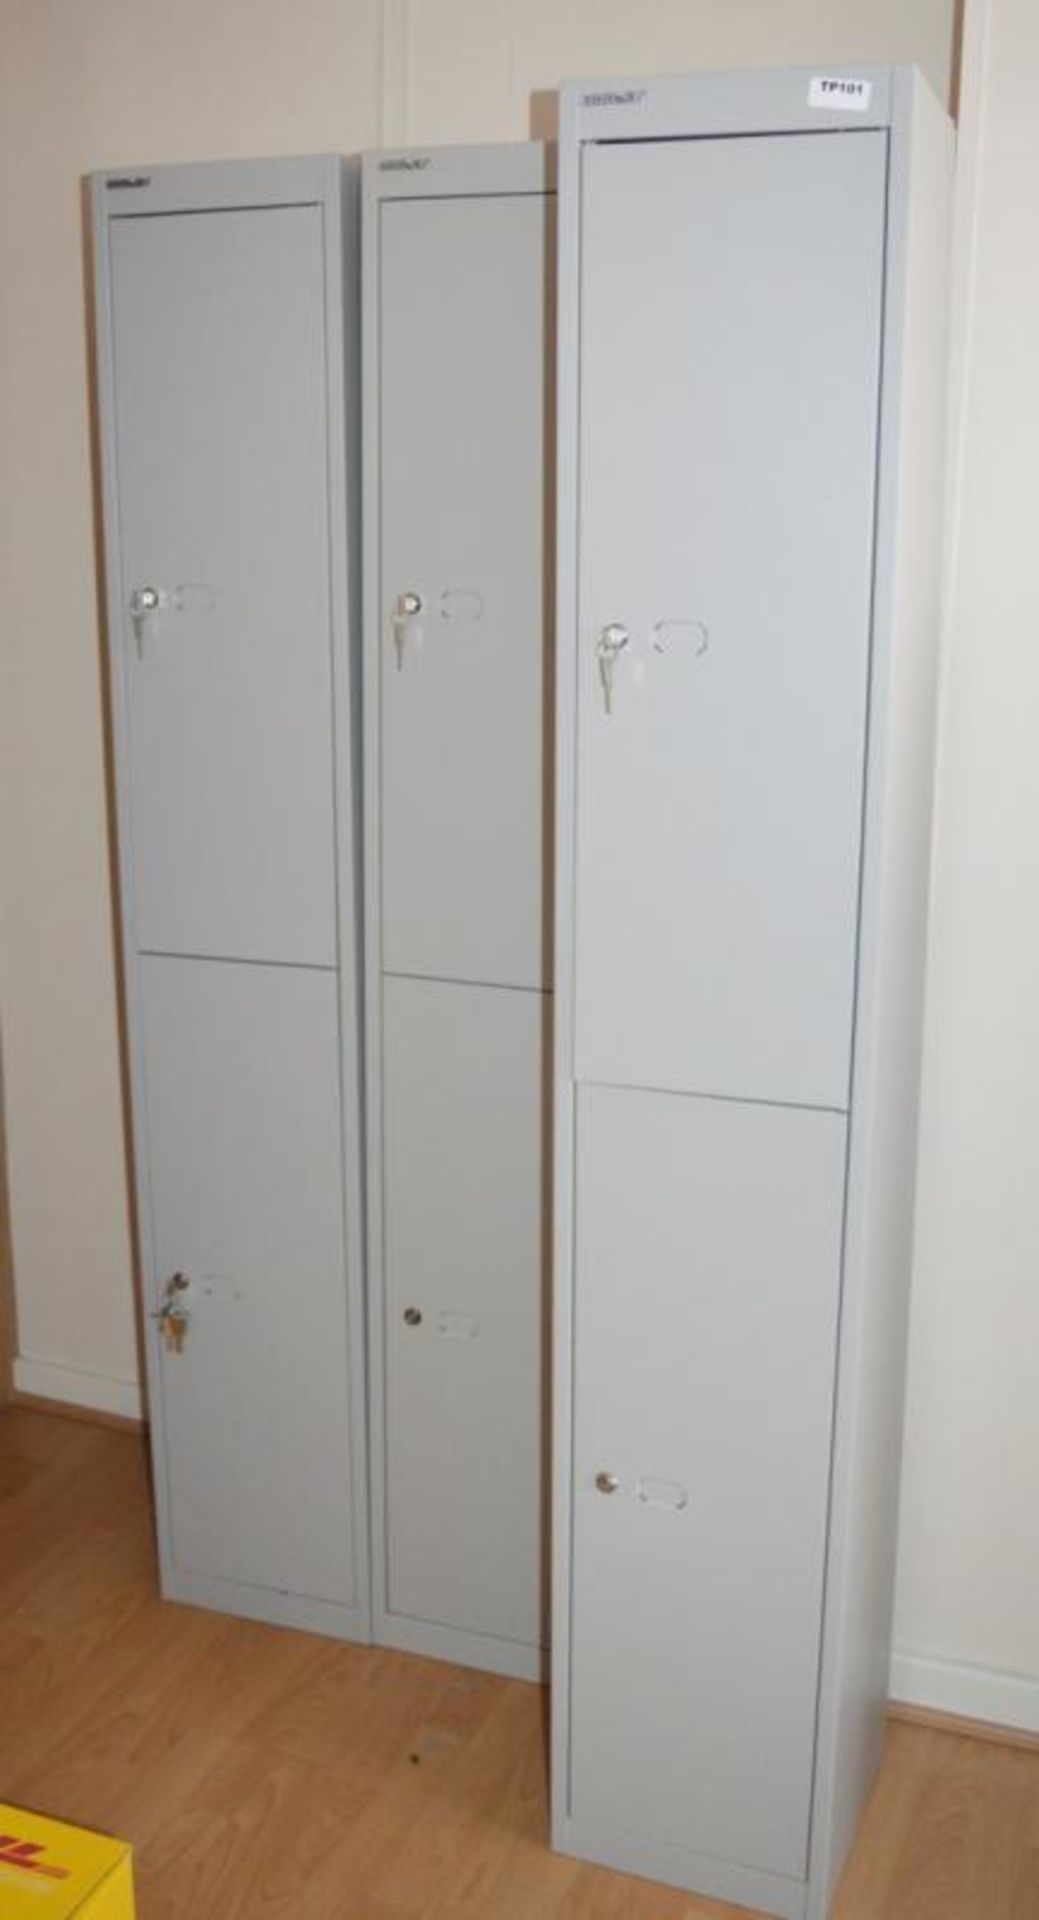 3 x Bisley Staff Locker Units - Suitable For 6 Members of Staff - Location: Altrincham WA14